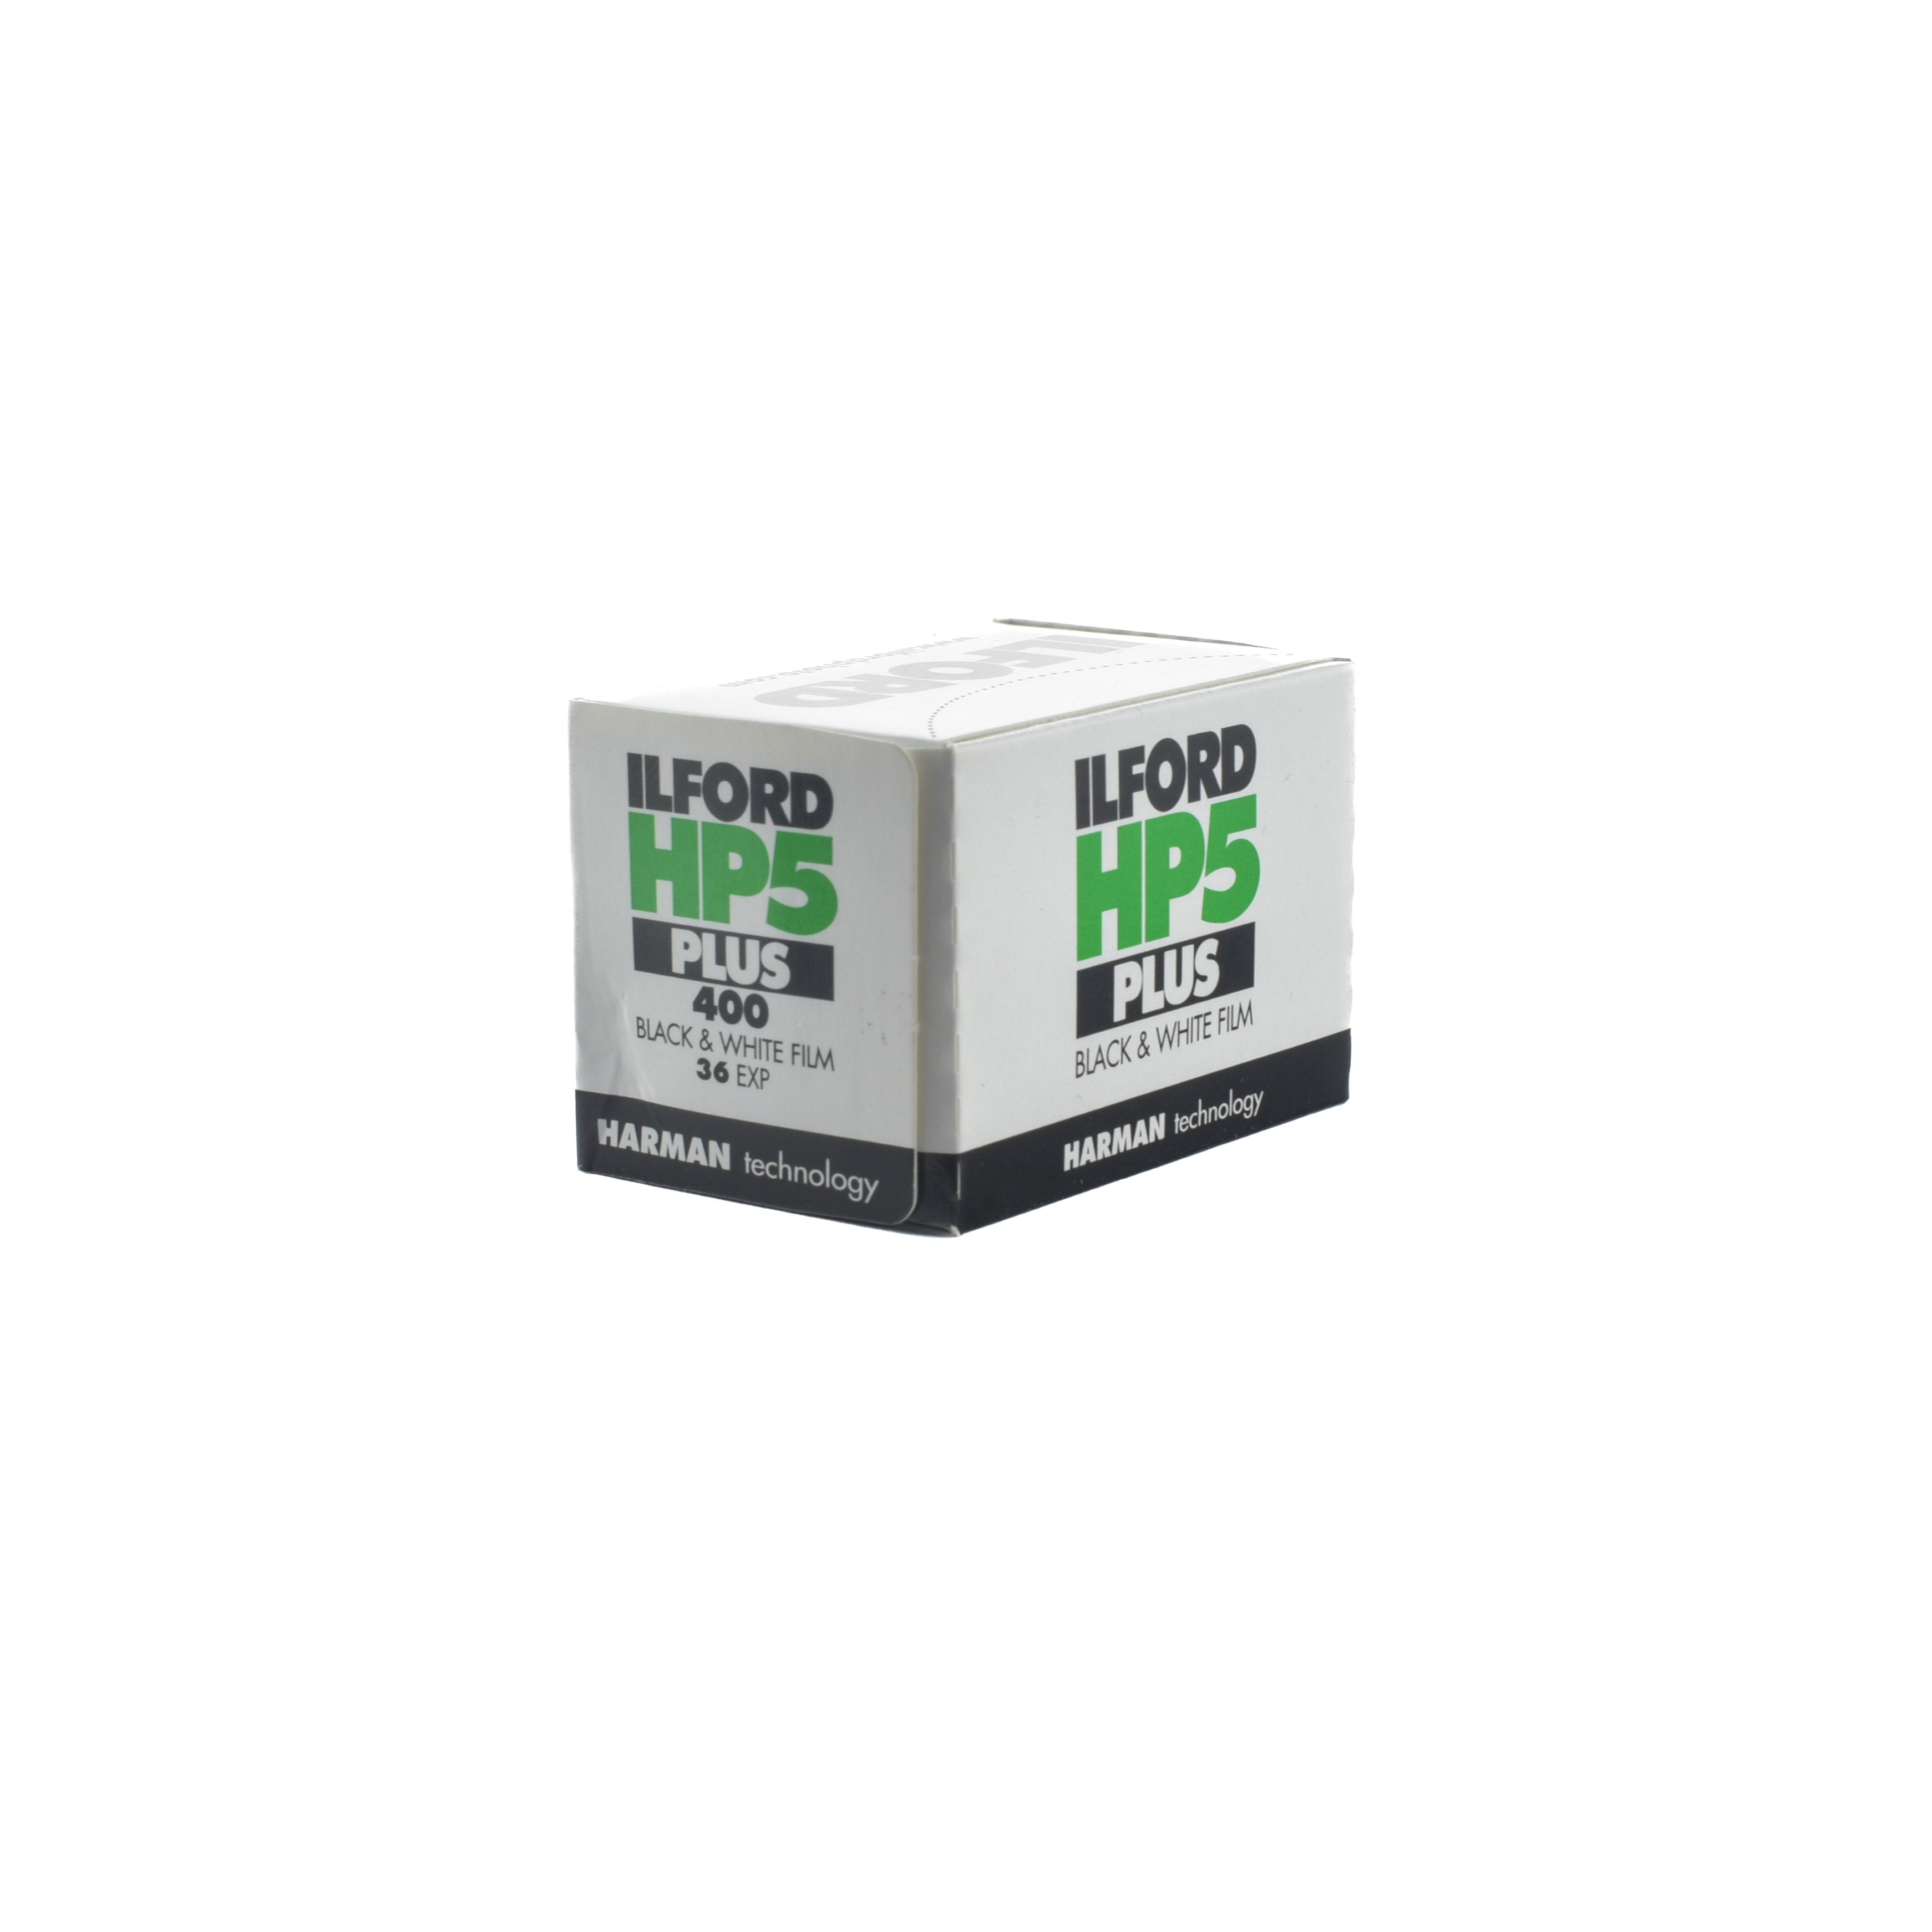 Ilford HP5 Plus 400 35mm Black & White Film (36 exposures)